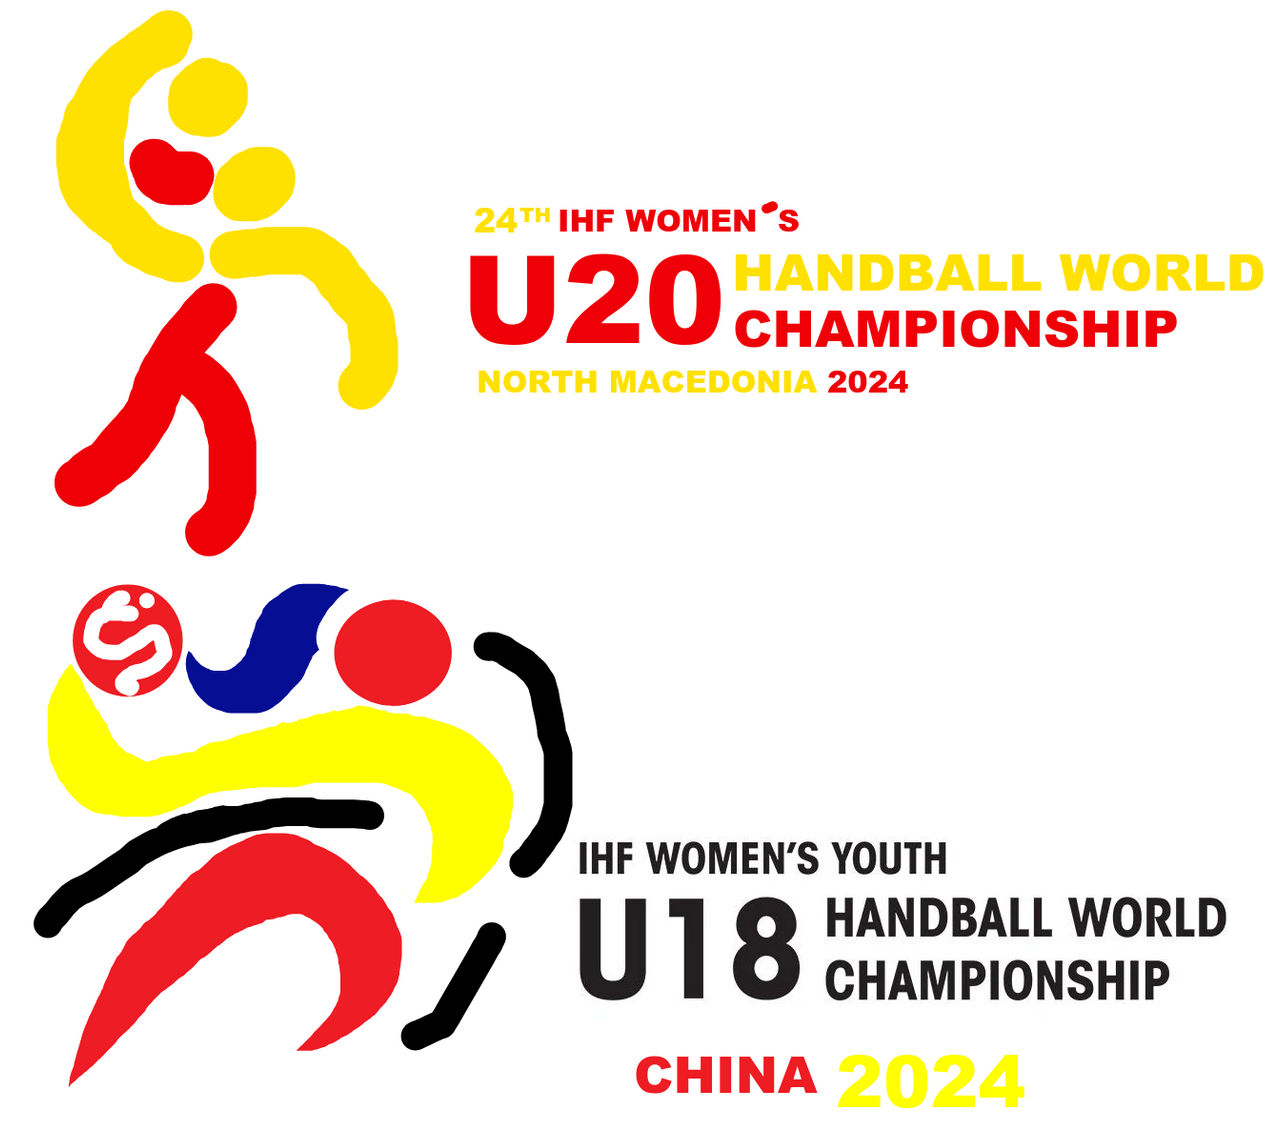 2023 World Men's Handball Championship POL/SWE by PaintRubber38 on  DeviantArt